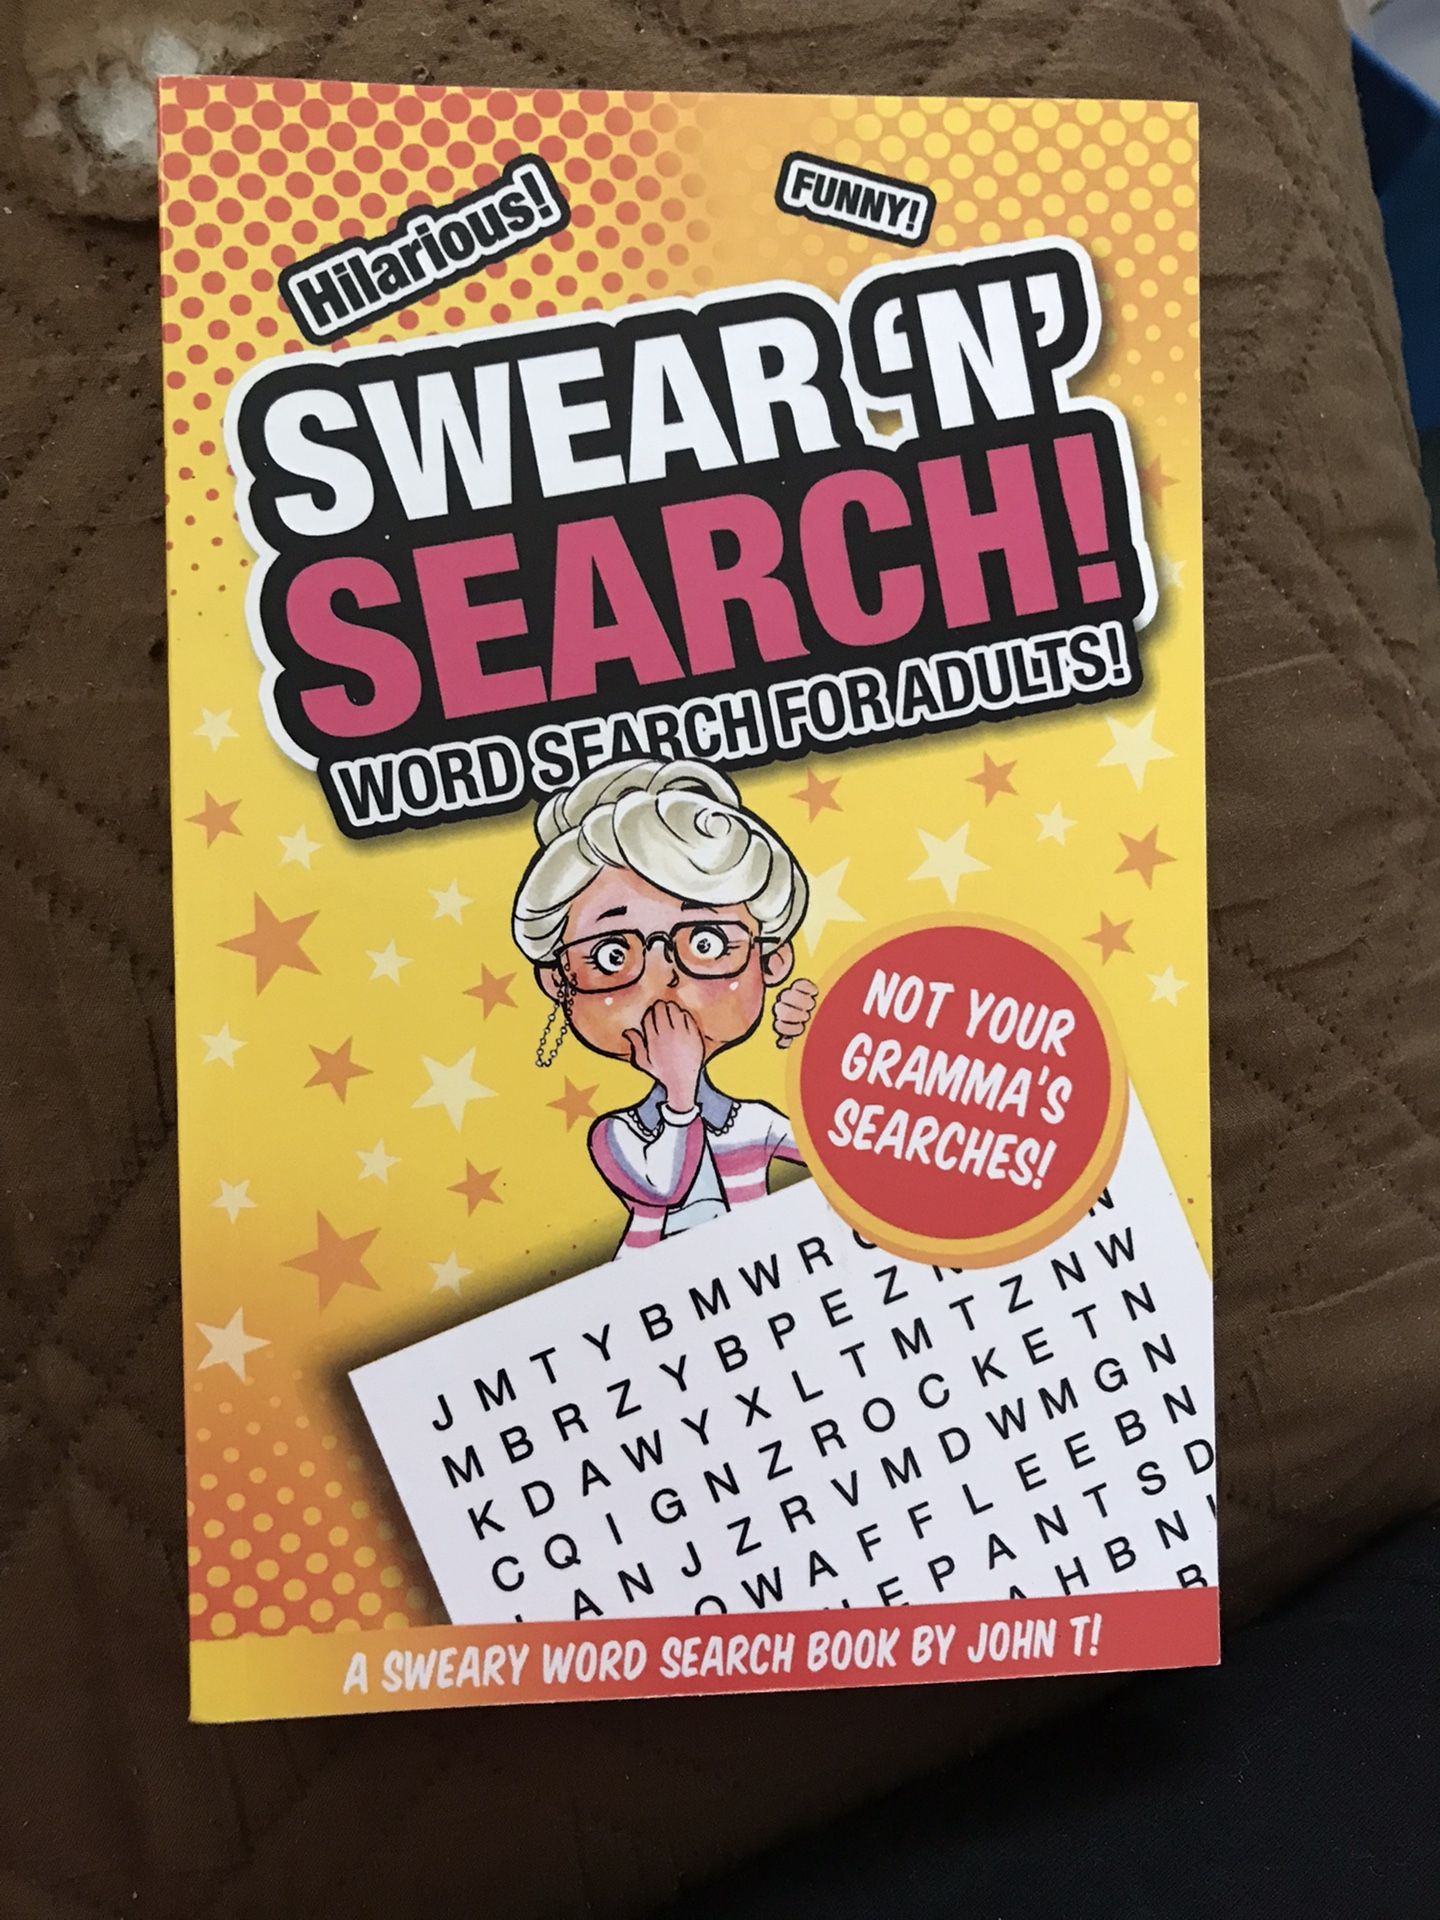 New Word Search Swear N Search 